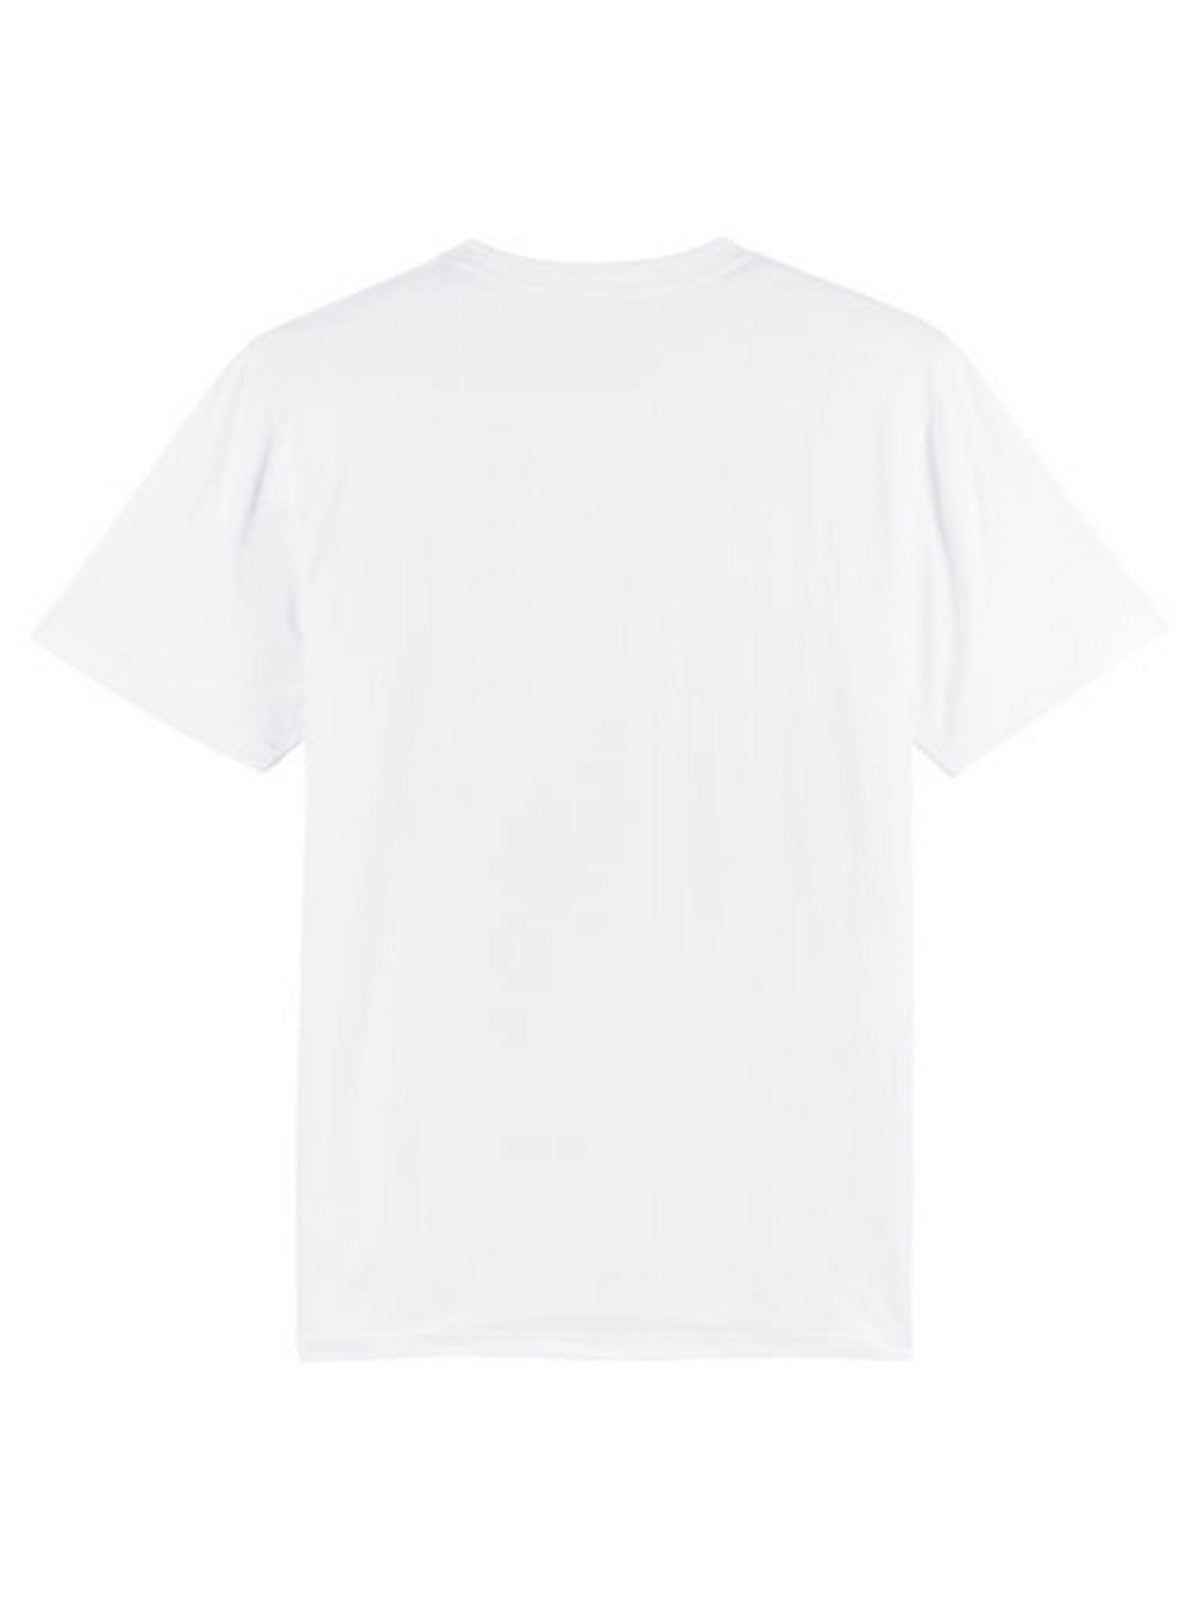 BARON FILOU T-Shirt et polo hommes FILOU LX Blanc